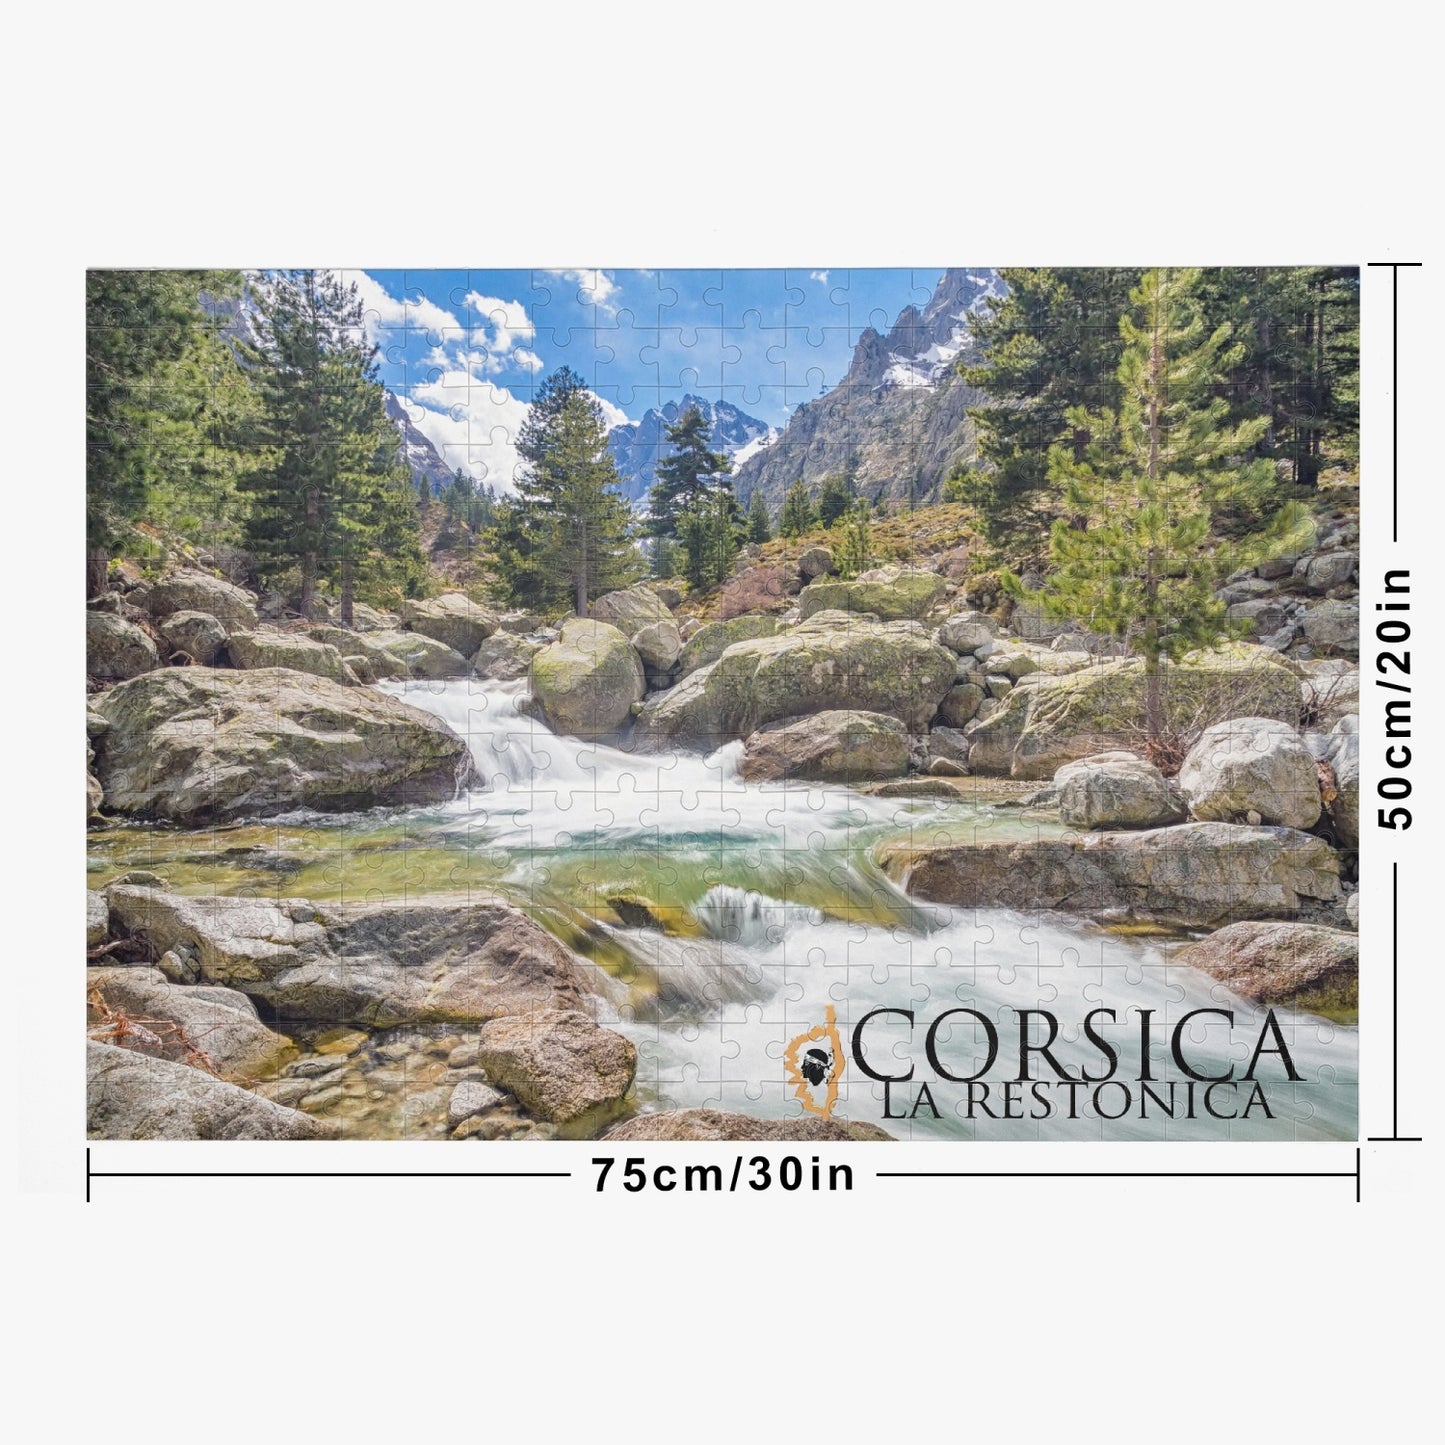 Puzzle (1000 pièces) La Restonica Corsica